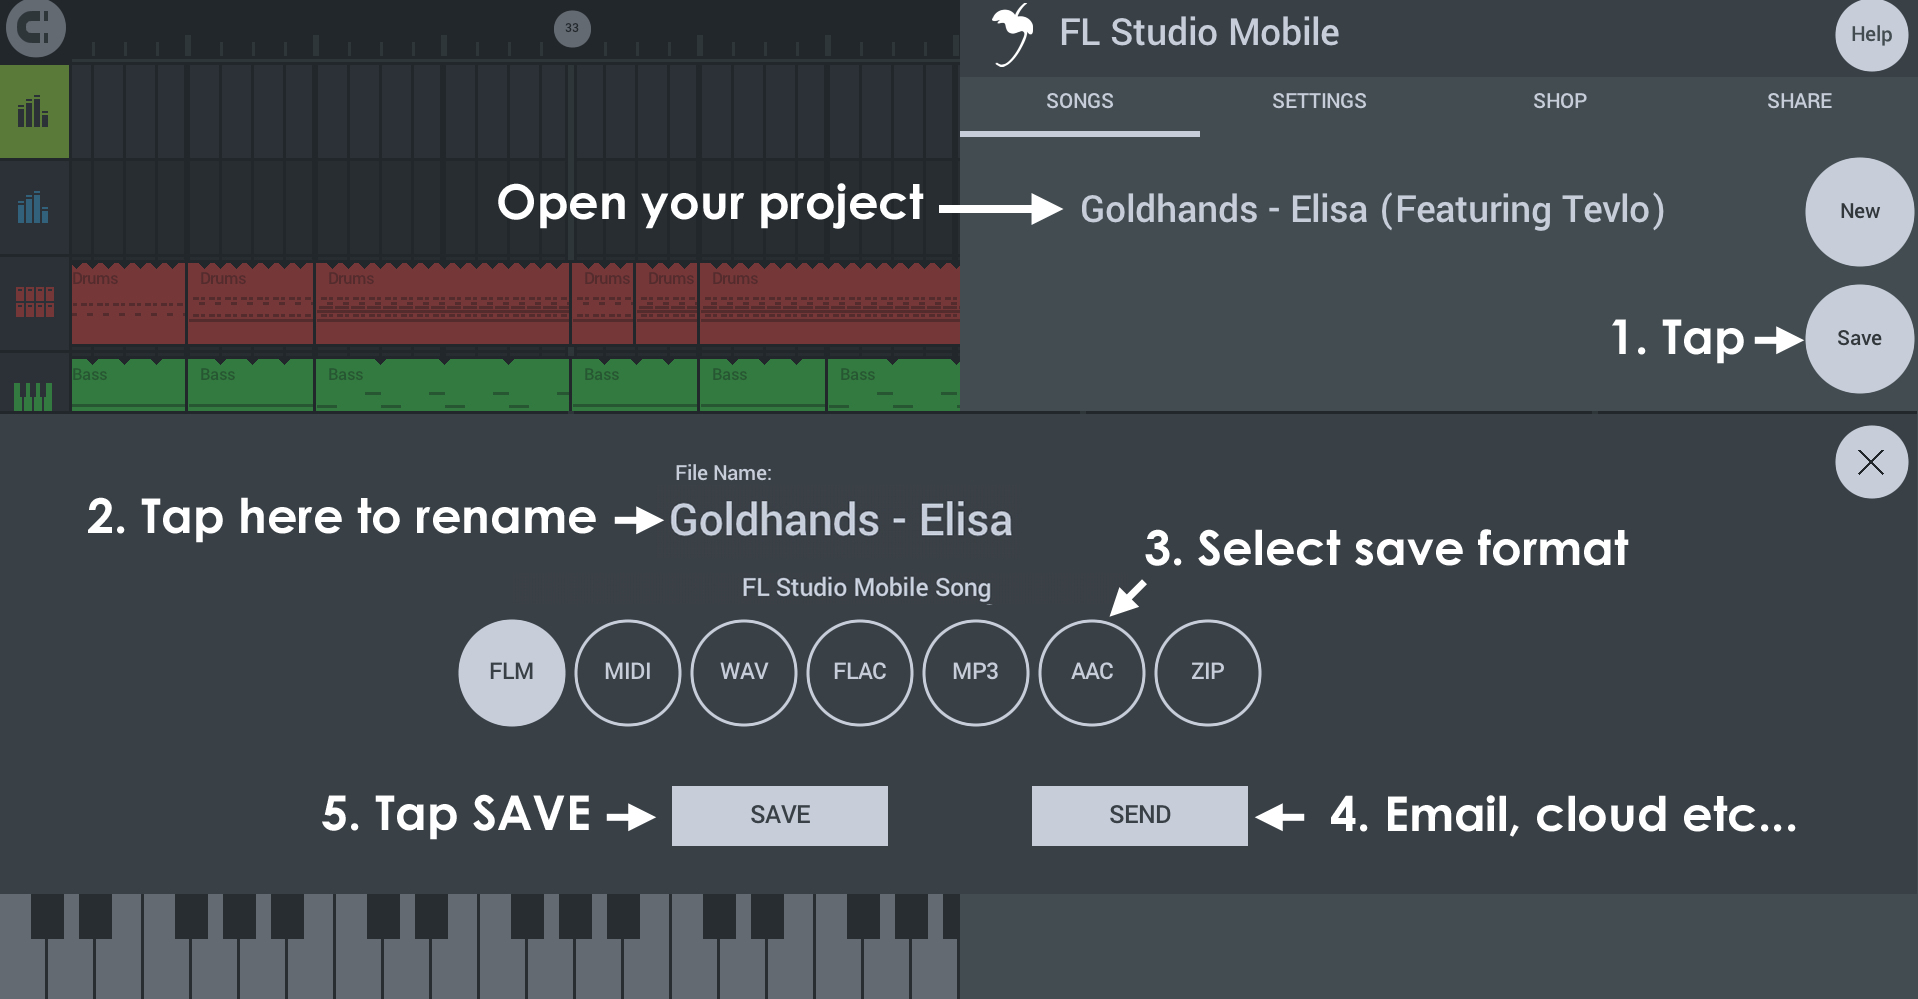 FL Studio 20 Archives - FL Studio